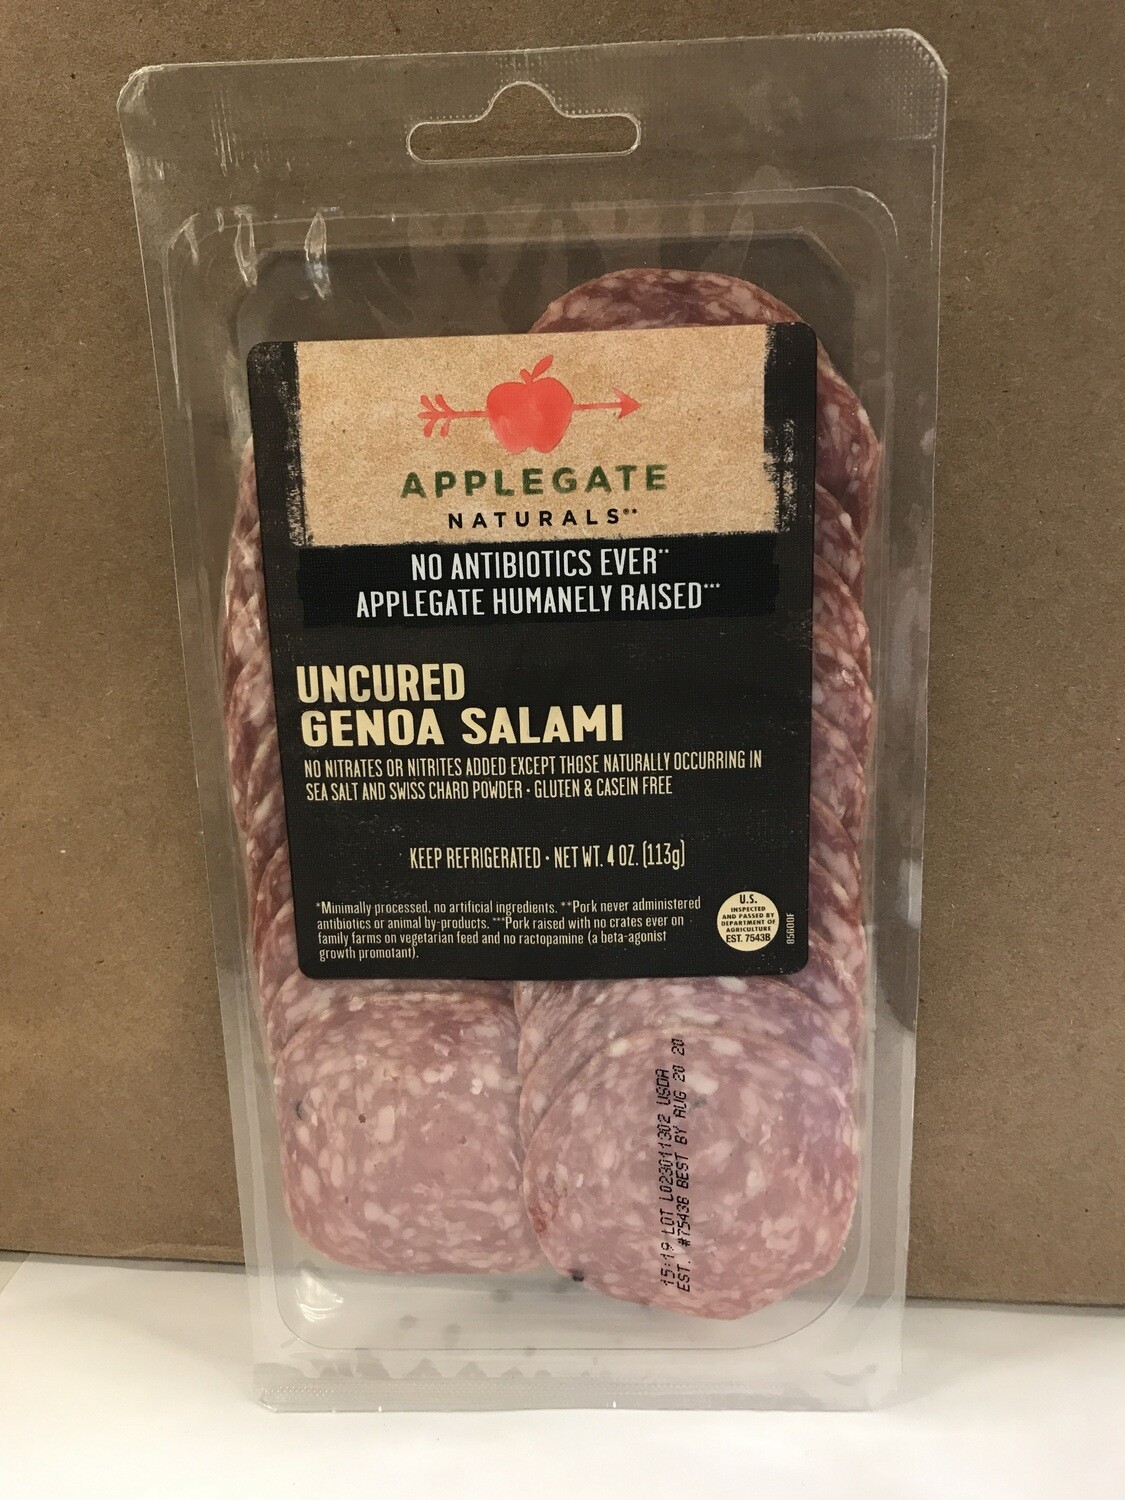 Deli / Meat / Applegate Uncured Genoa Salami